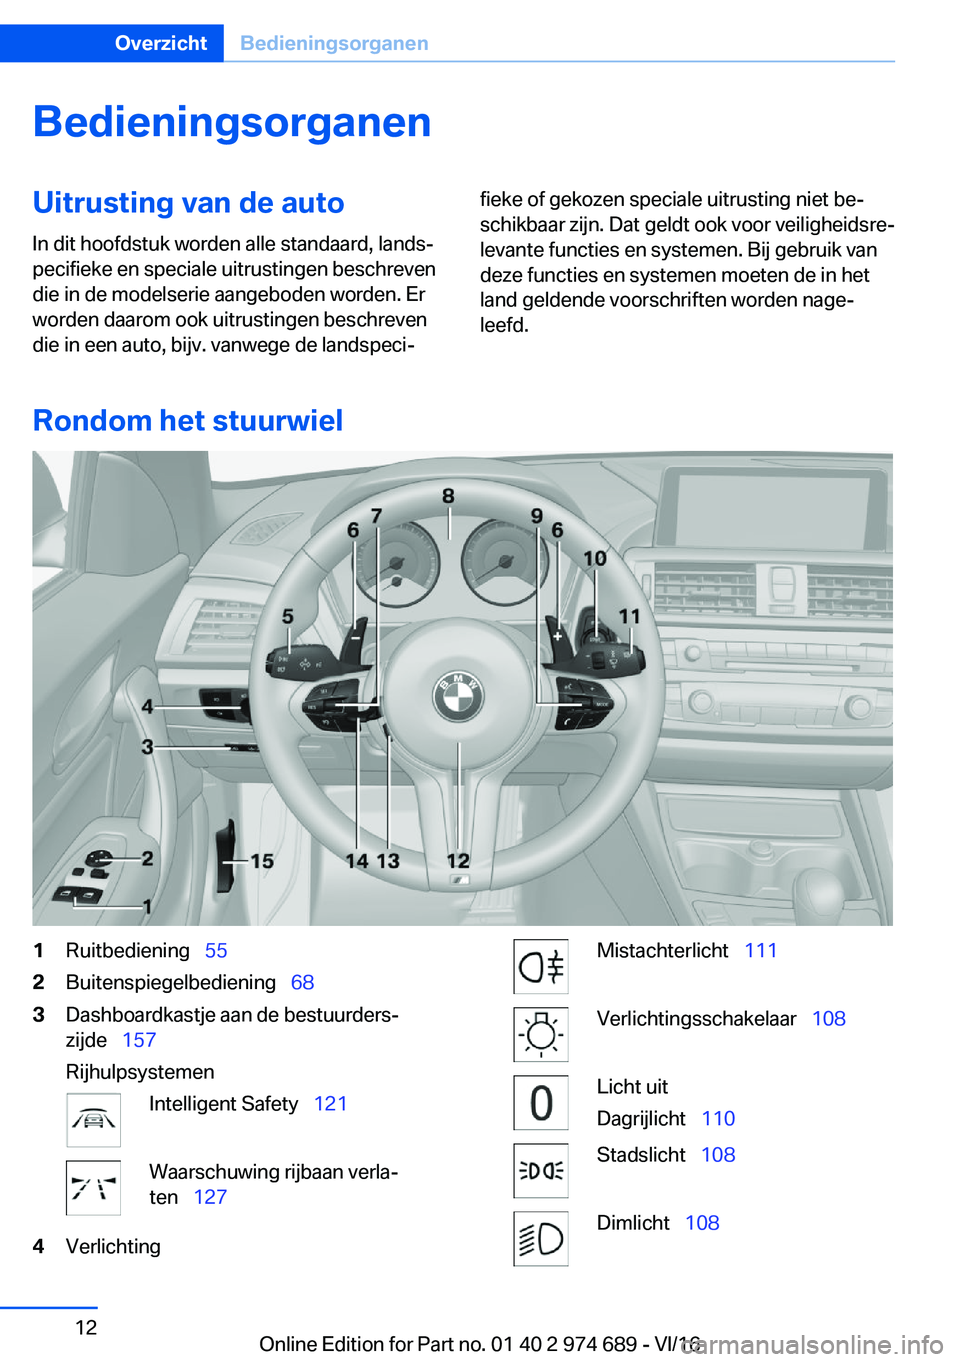 BMW M2 2017  Instructieboekjes (in Dutch) �B�e�d�i�e�n�i�n�g�s�o�r�g�a�n�e�n�U�i�t�r�u�s�t�i�n�g��v�a�n��d�e��a�u�t�o�I�n� �d�i�t� �h�o�o�f�d�s�t�u�k� �w�o�r�d�e�n� �a�l�l�e� �s�t�a�n�d�a�a�r�d�,� �l�a�n�d�sj
�p�e�c�i�f�i�e�k�e� �e�n� �s�